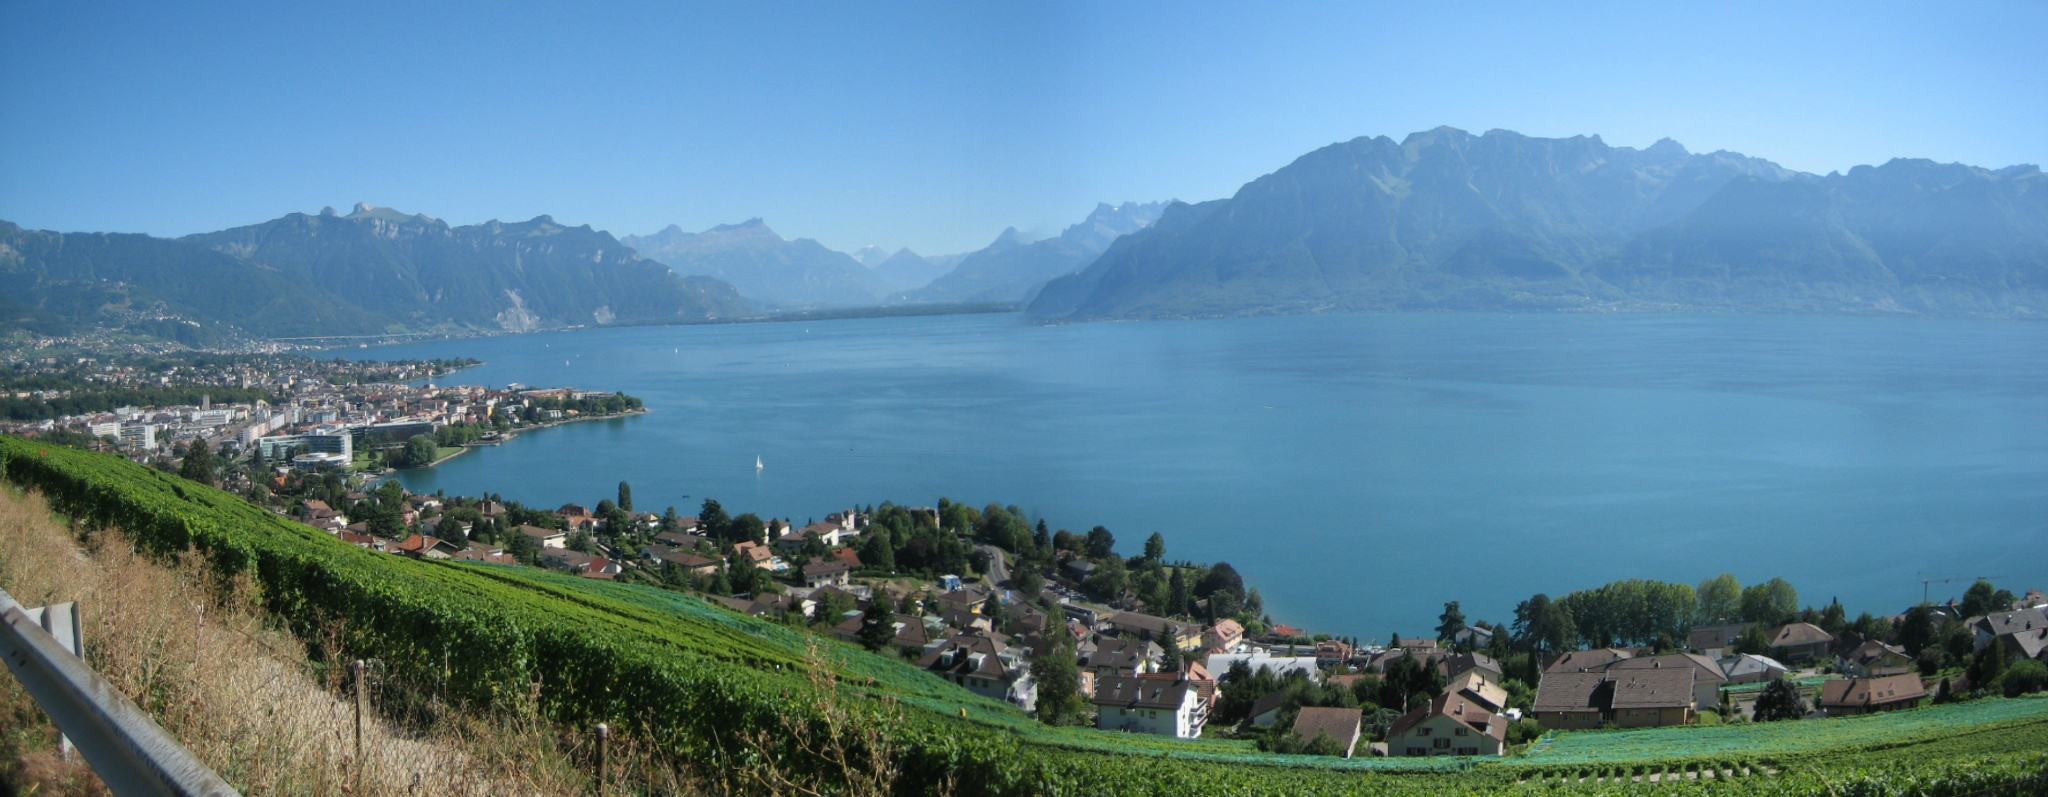 Respect en el lago Leman (Día 3. En Montreux, Suiza)